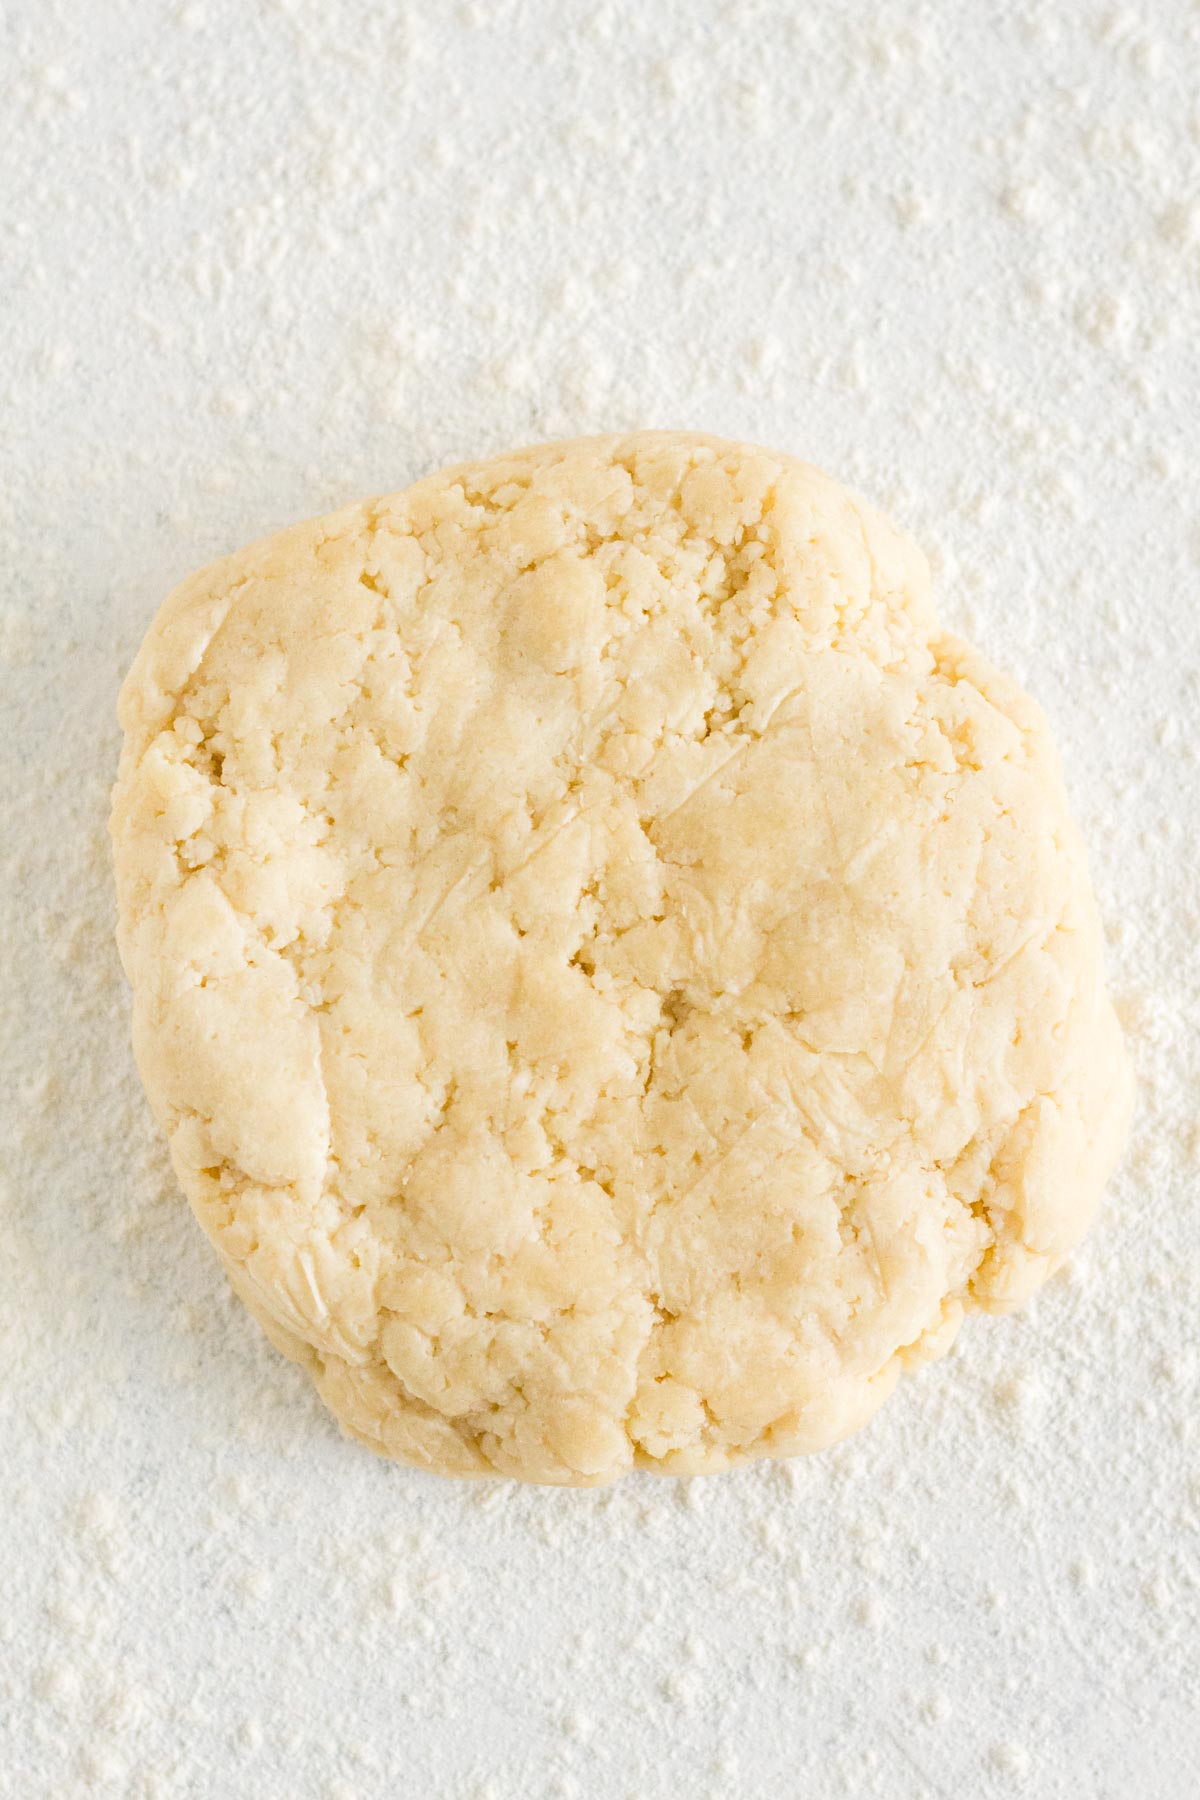 Pie crust dough on a white, floured surface.